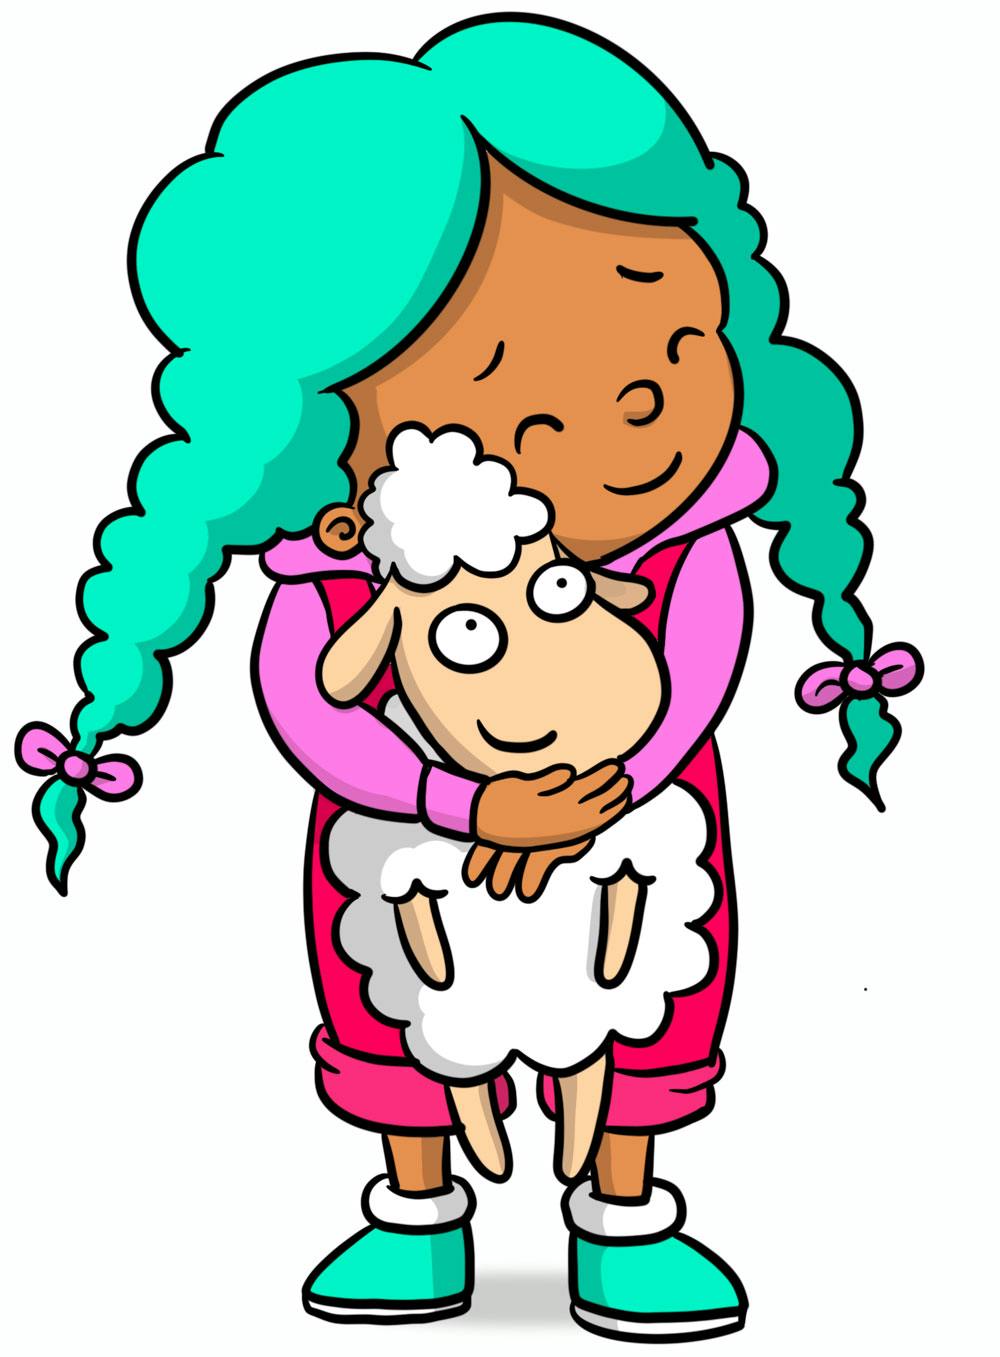 mary had a little lamb clip art